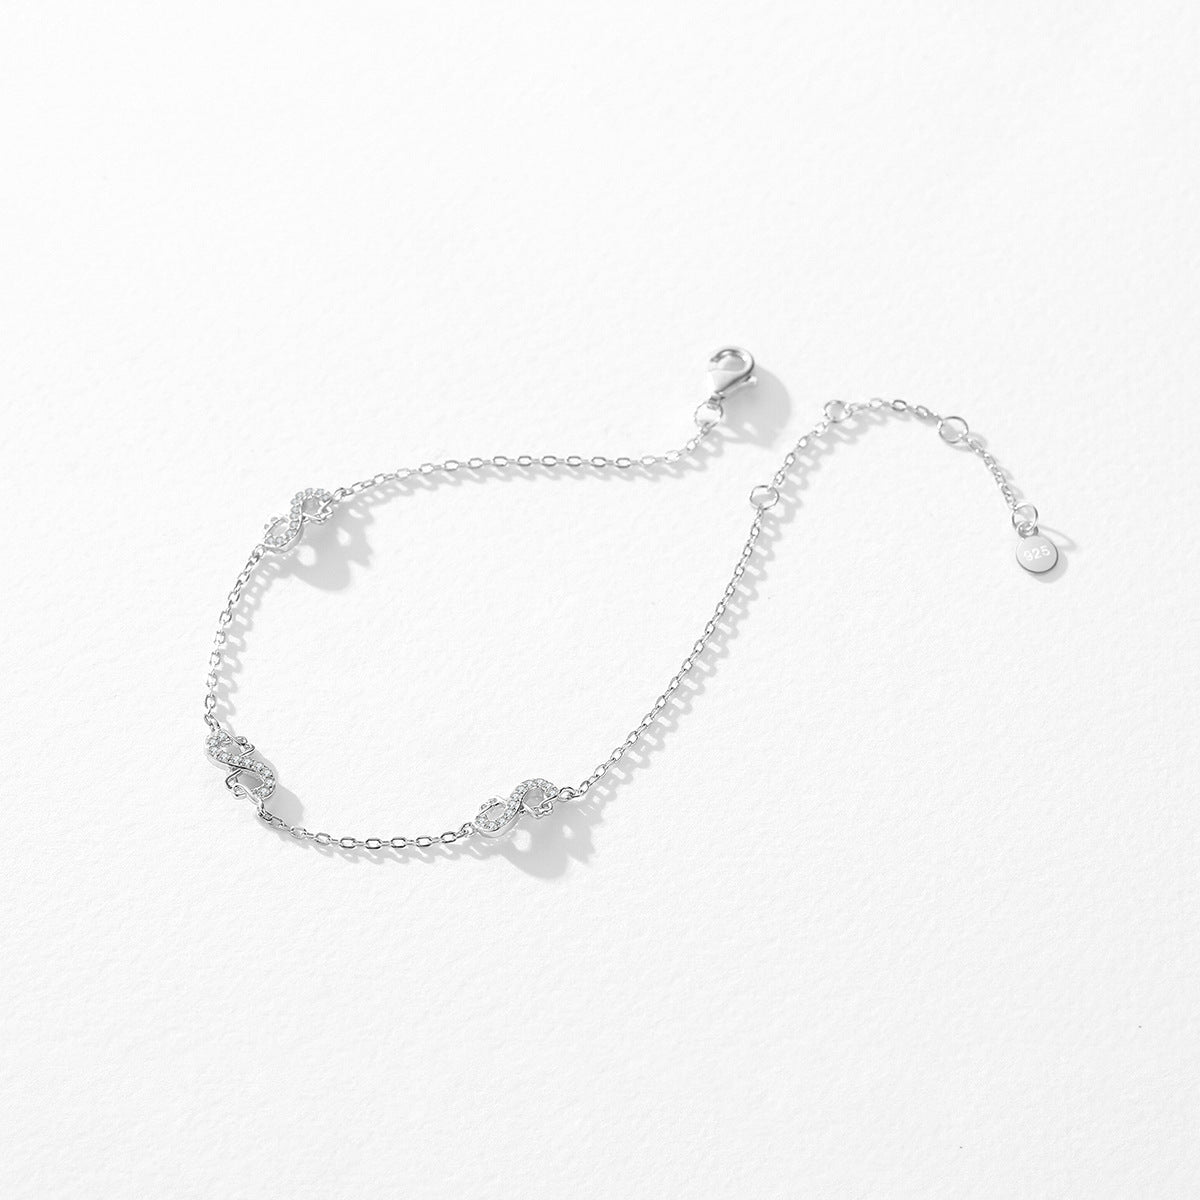 Infinite Love Sterling Silver Bracelet with Zircon Gems by Planderful